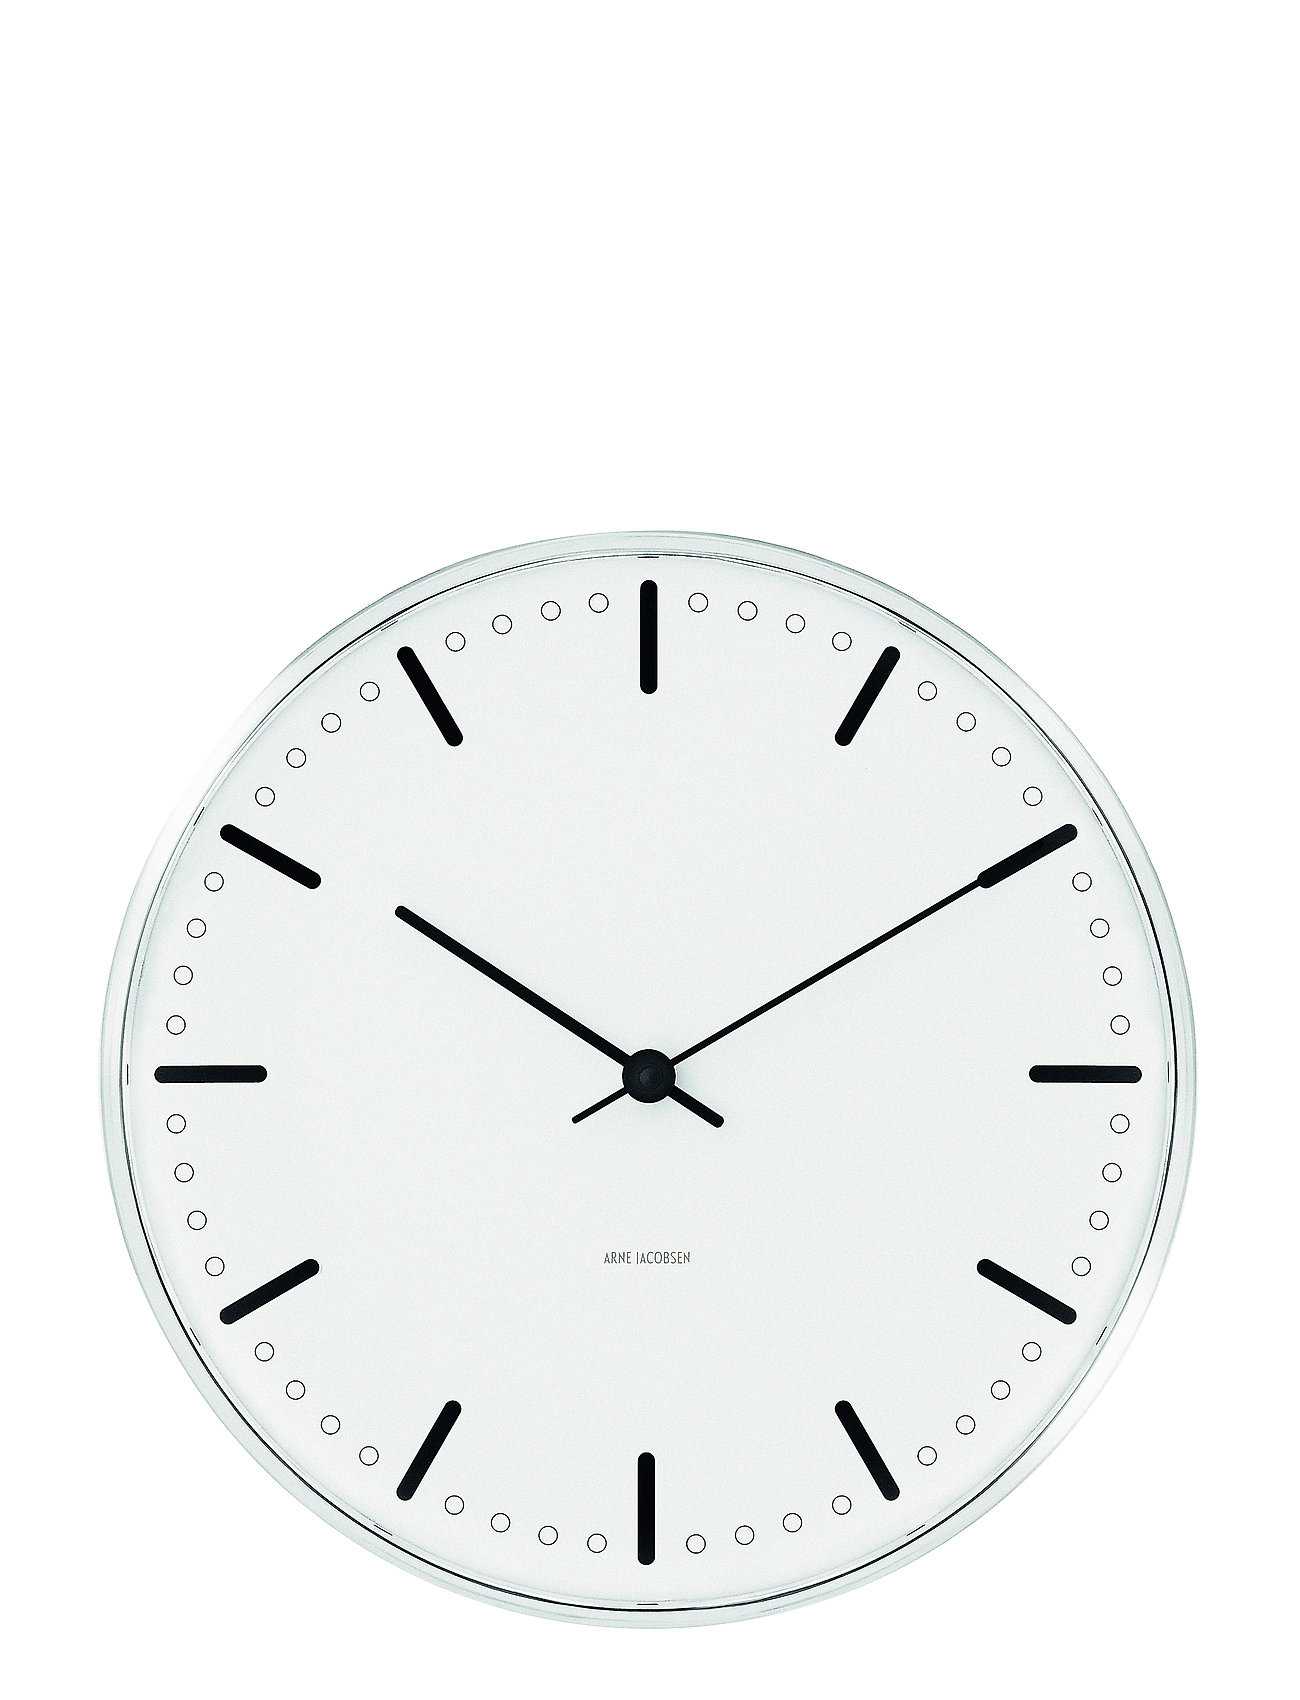 "Arne Jacobsen Clocks" "City Hall Vægur Ø21 Cm Home Decoration Watches Wall Clocks White Arne